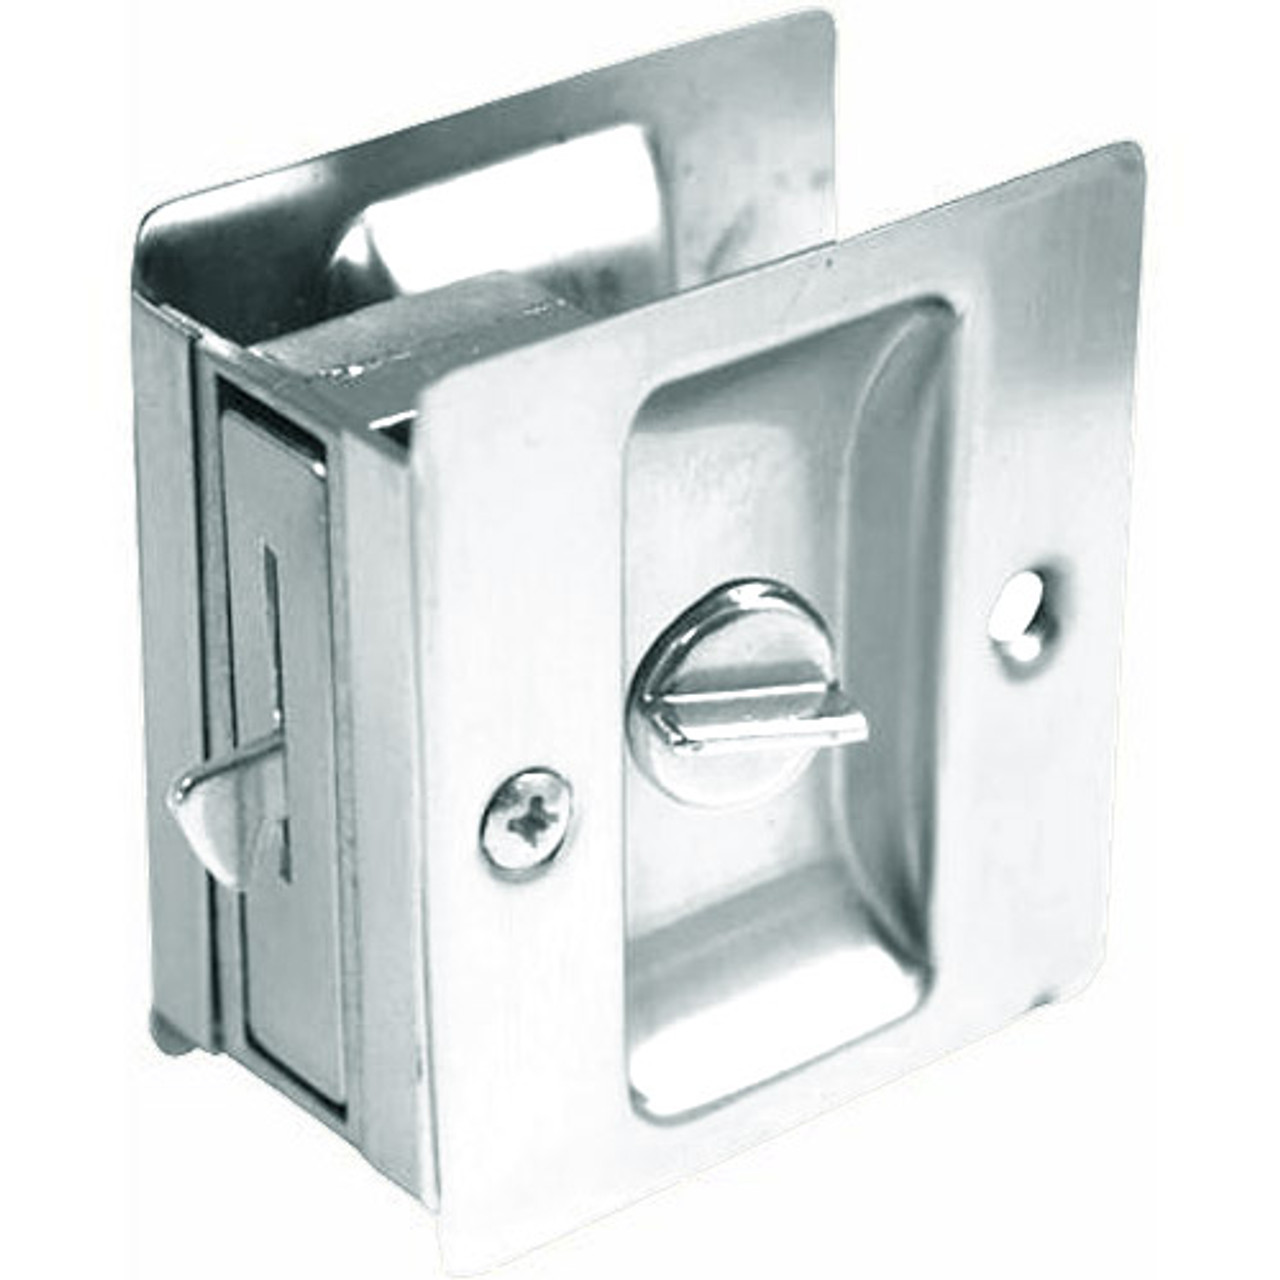 PDL-101-625 Don Jo Pocket Door Lock in Polished Chrome Finish